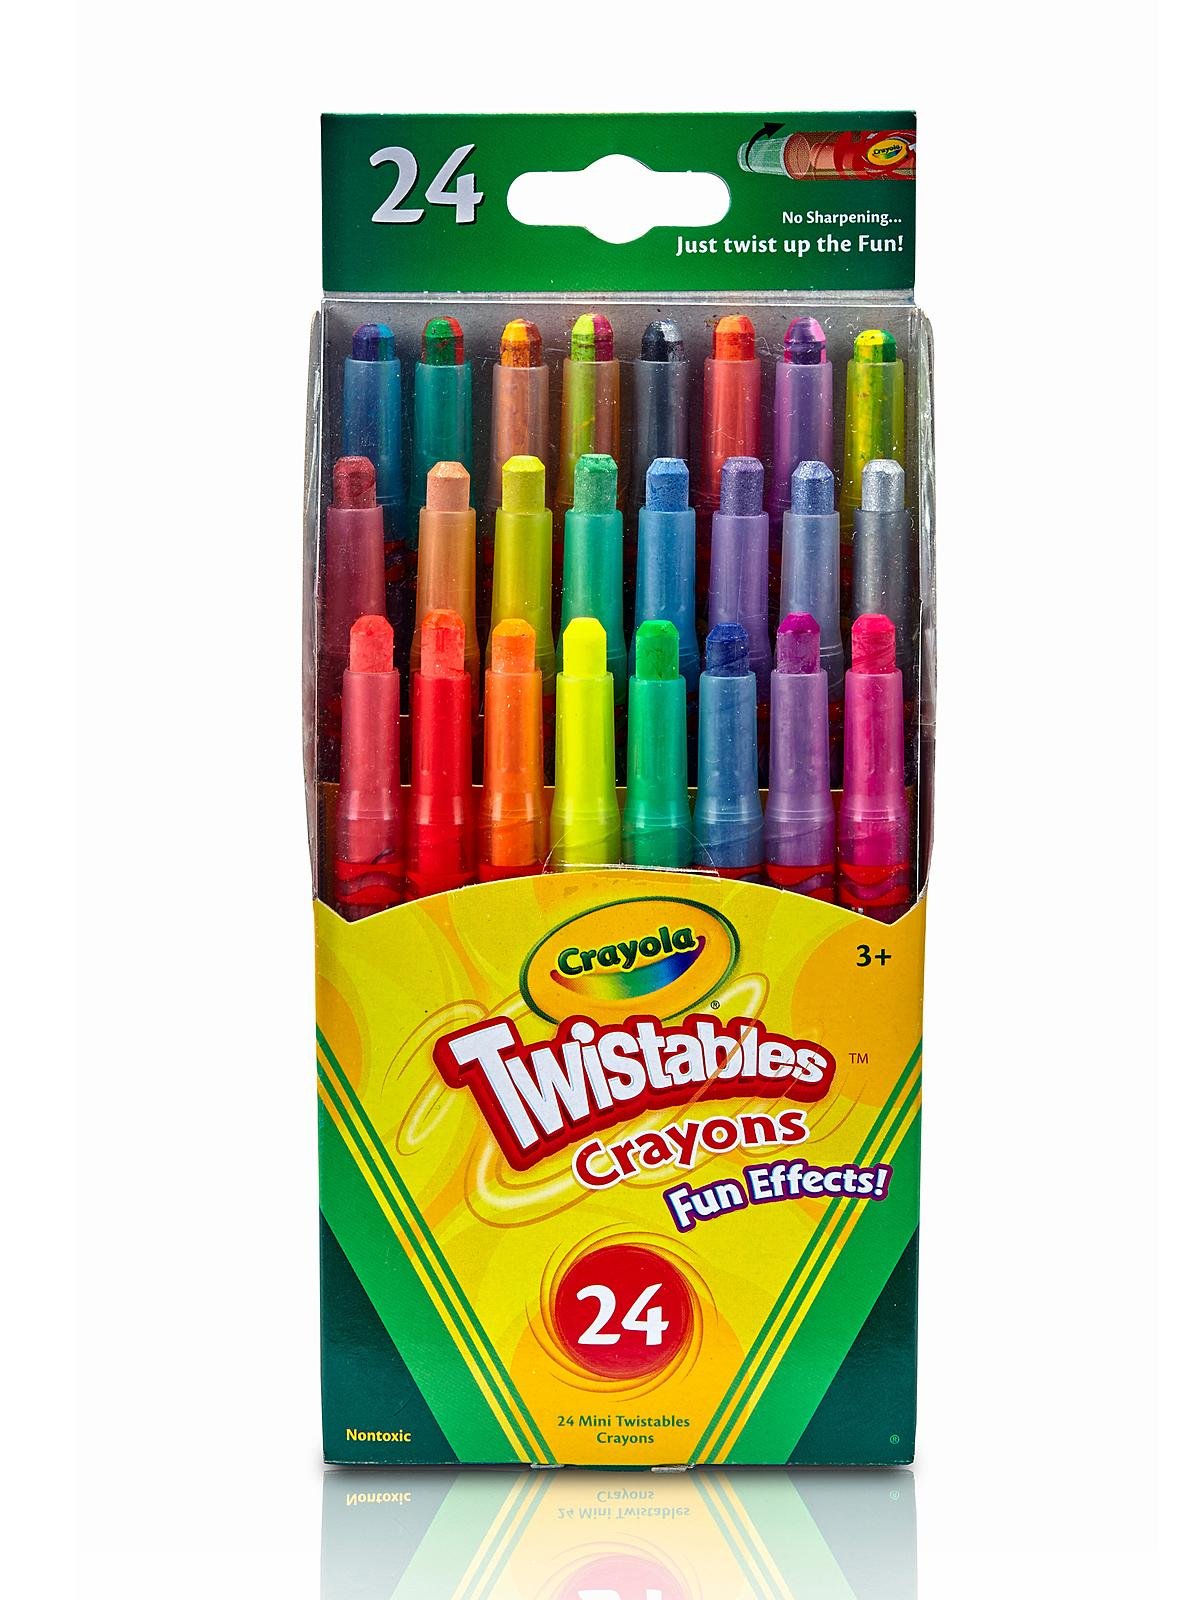 REVIEW] Crayola Neon Crayons, 24 count 